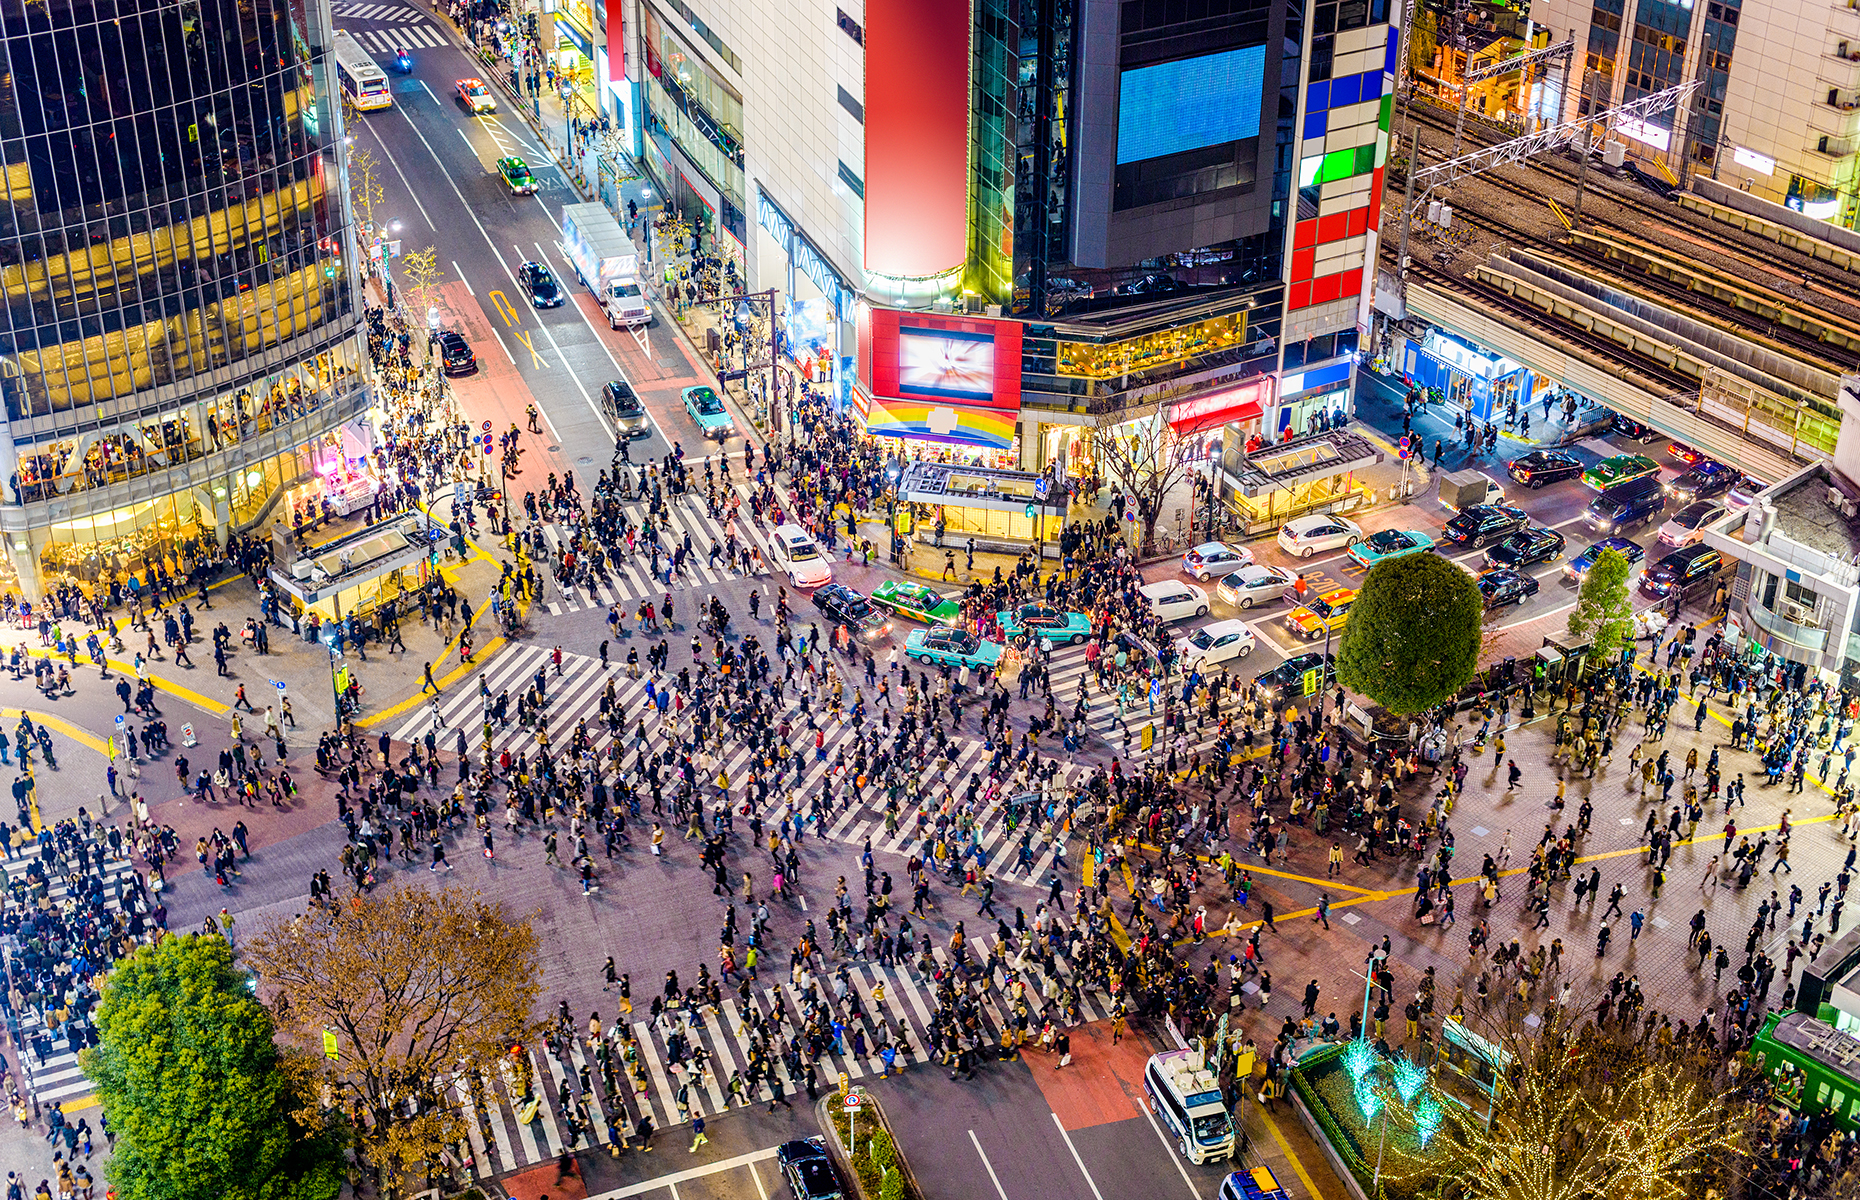 Shibuya crossing, Tokyo, Japan. (Image: Sean Pavone/Shutterstock)